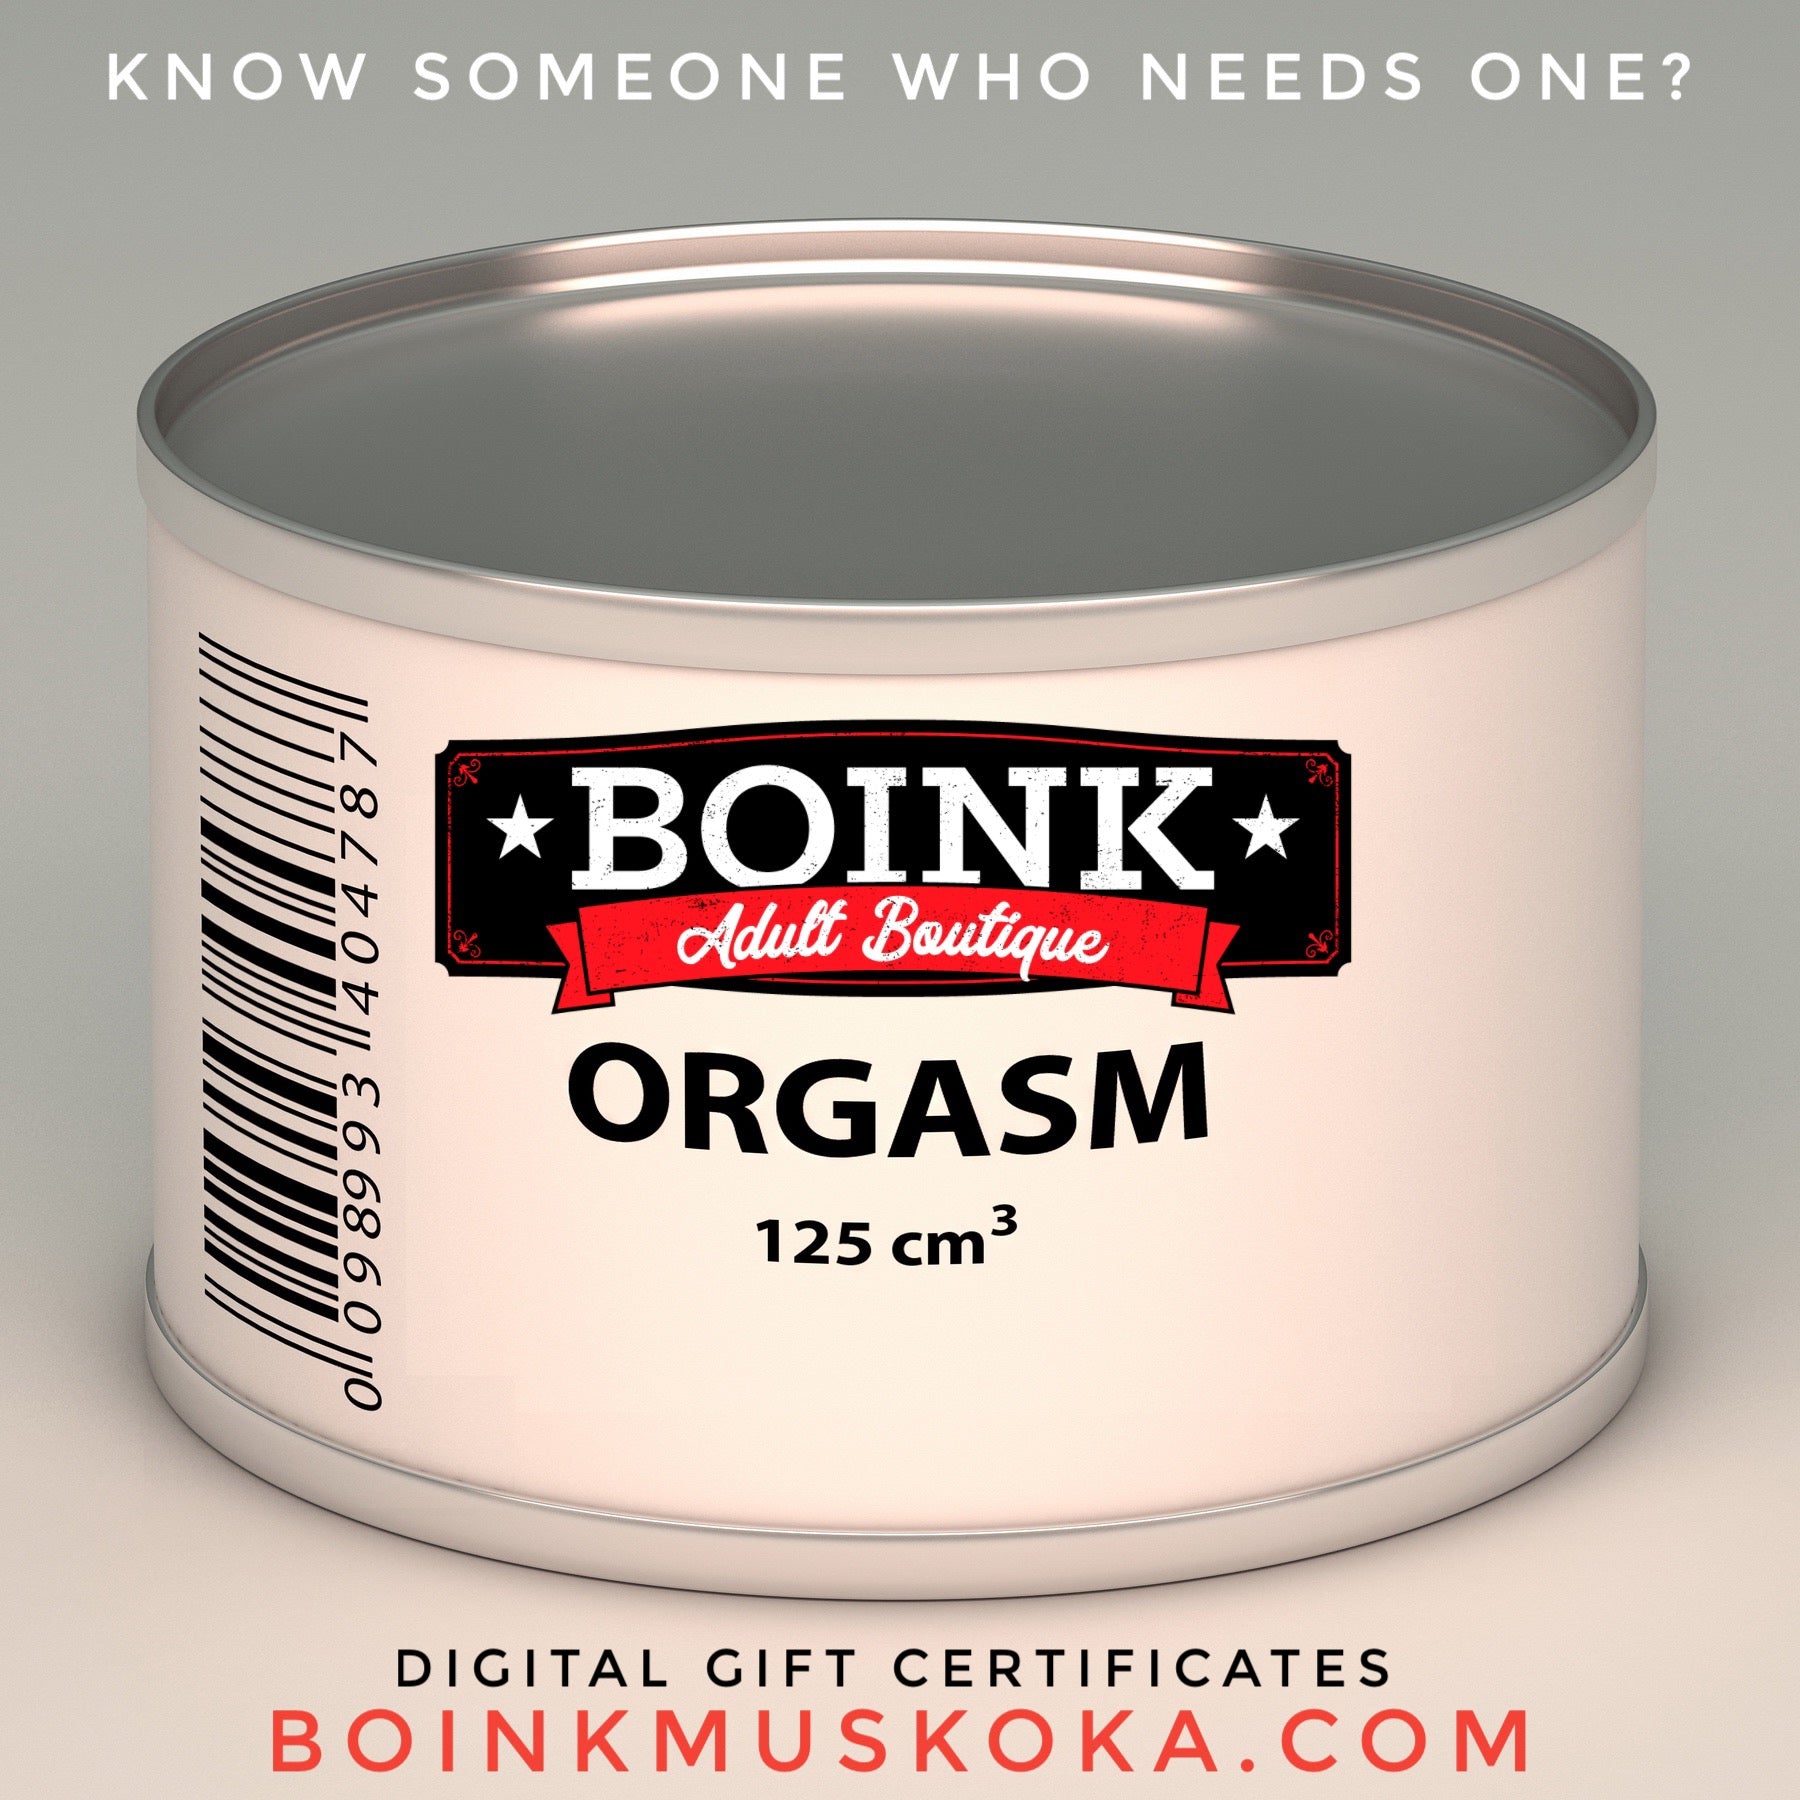 Boink Adult Boutique - Digital Gift Certificates - Send an orgasm to someone boinkmuskoka.com